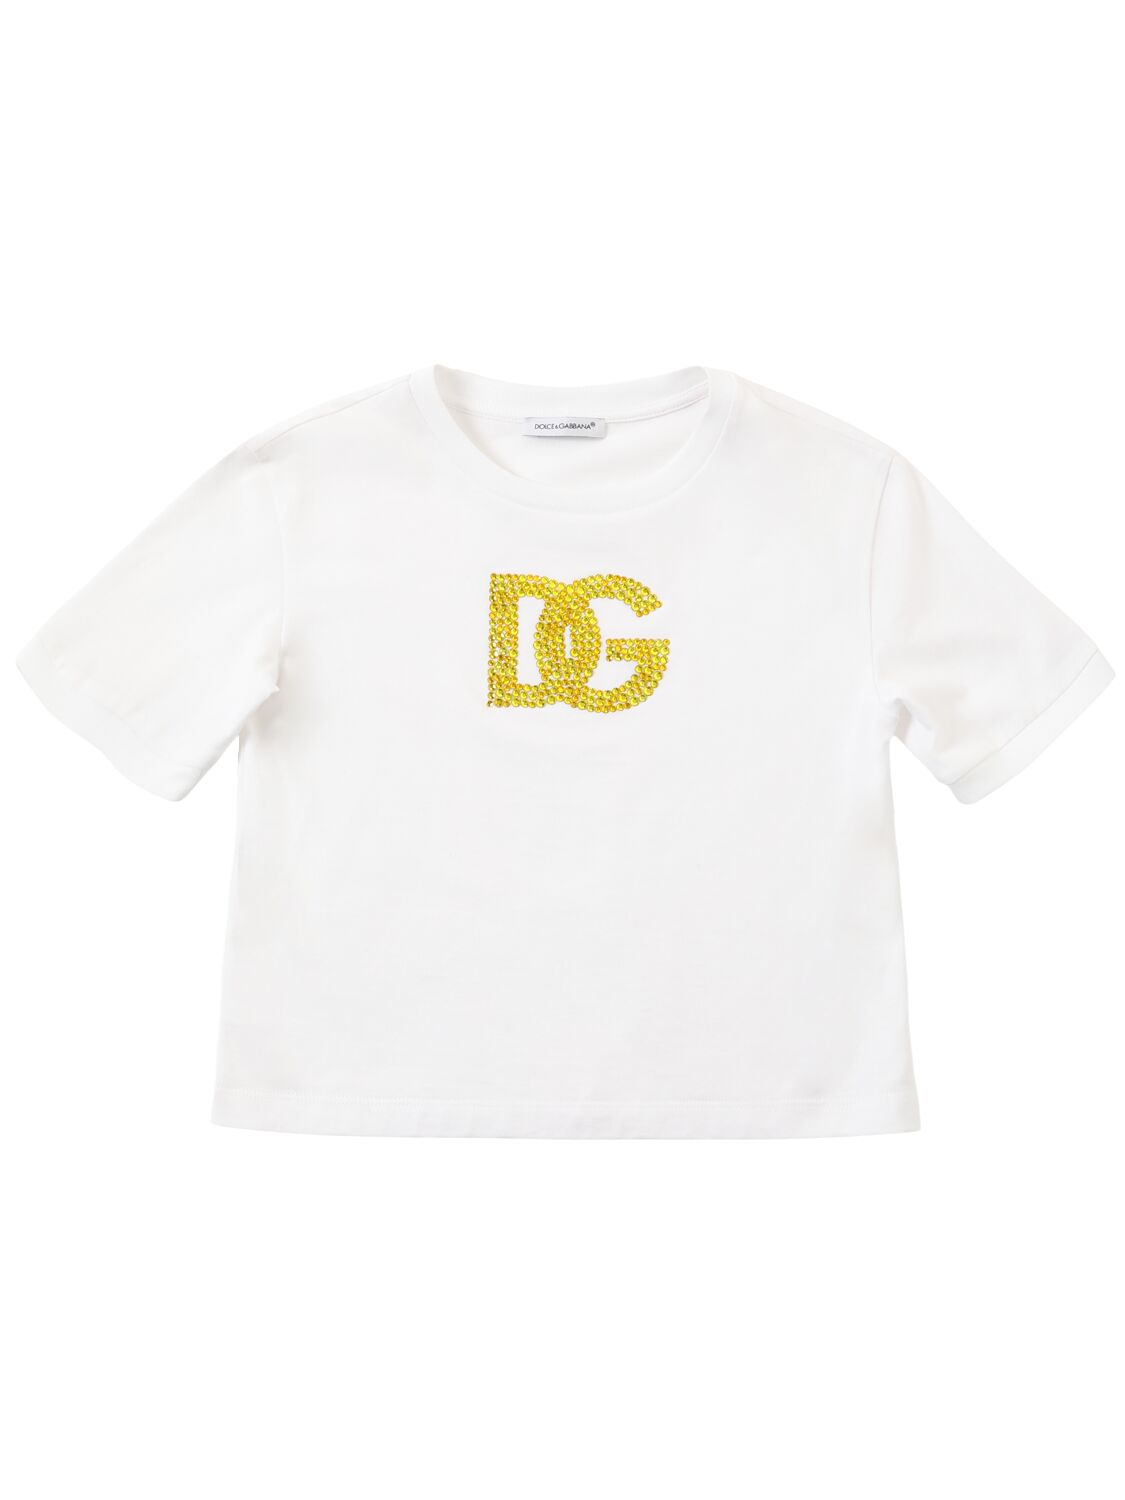 Dolce & Gabbana Embellished Logo Cotton Jersey T-shirt In White